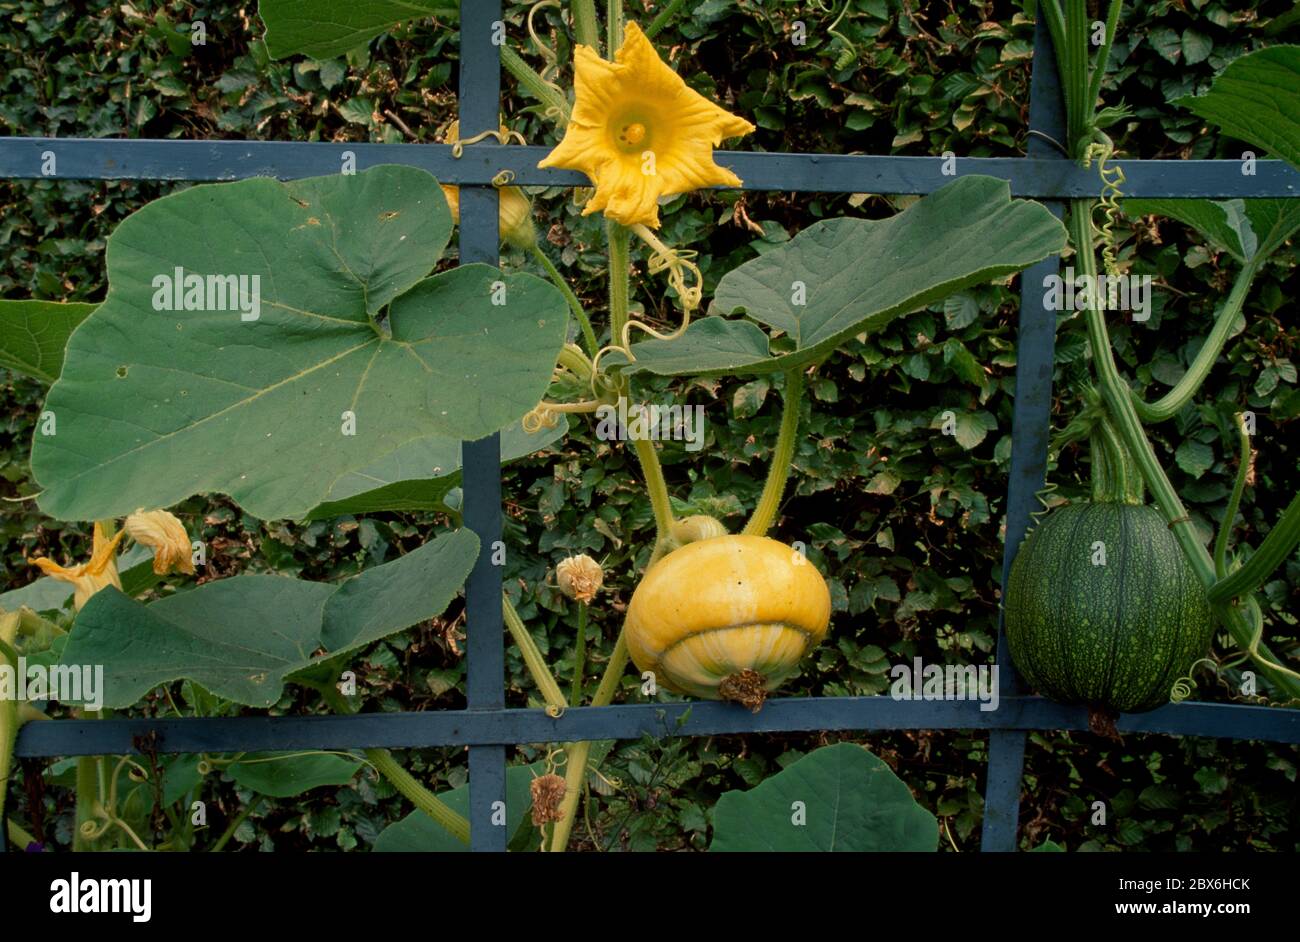 Ornamental gourds growing up green trellis in vegetable garden Stock Photo